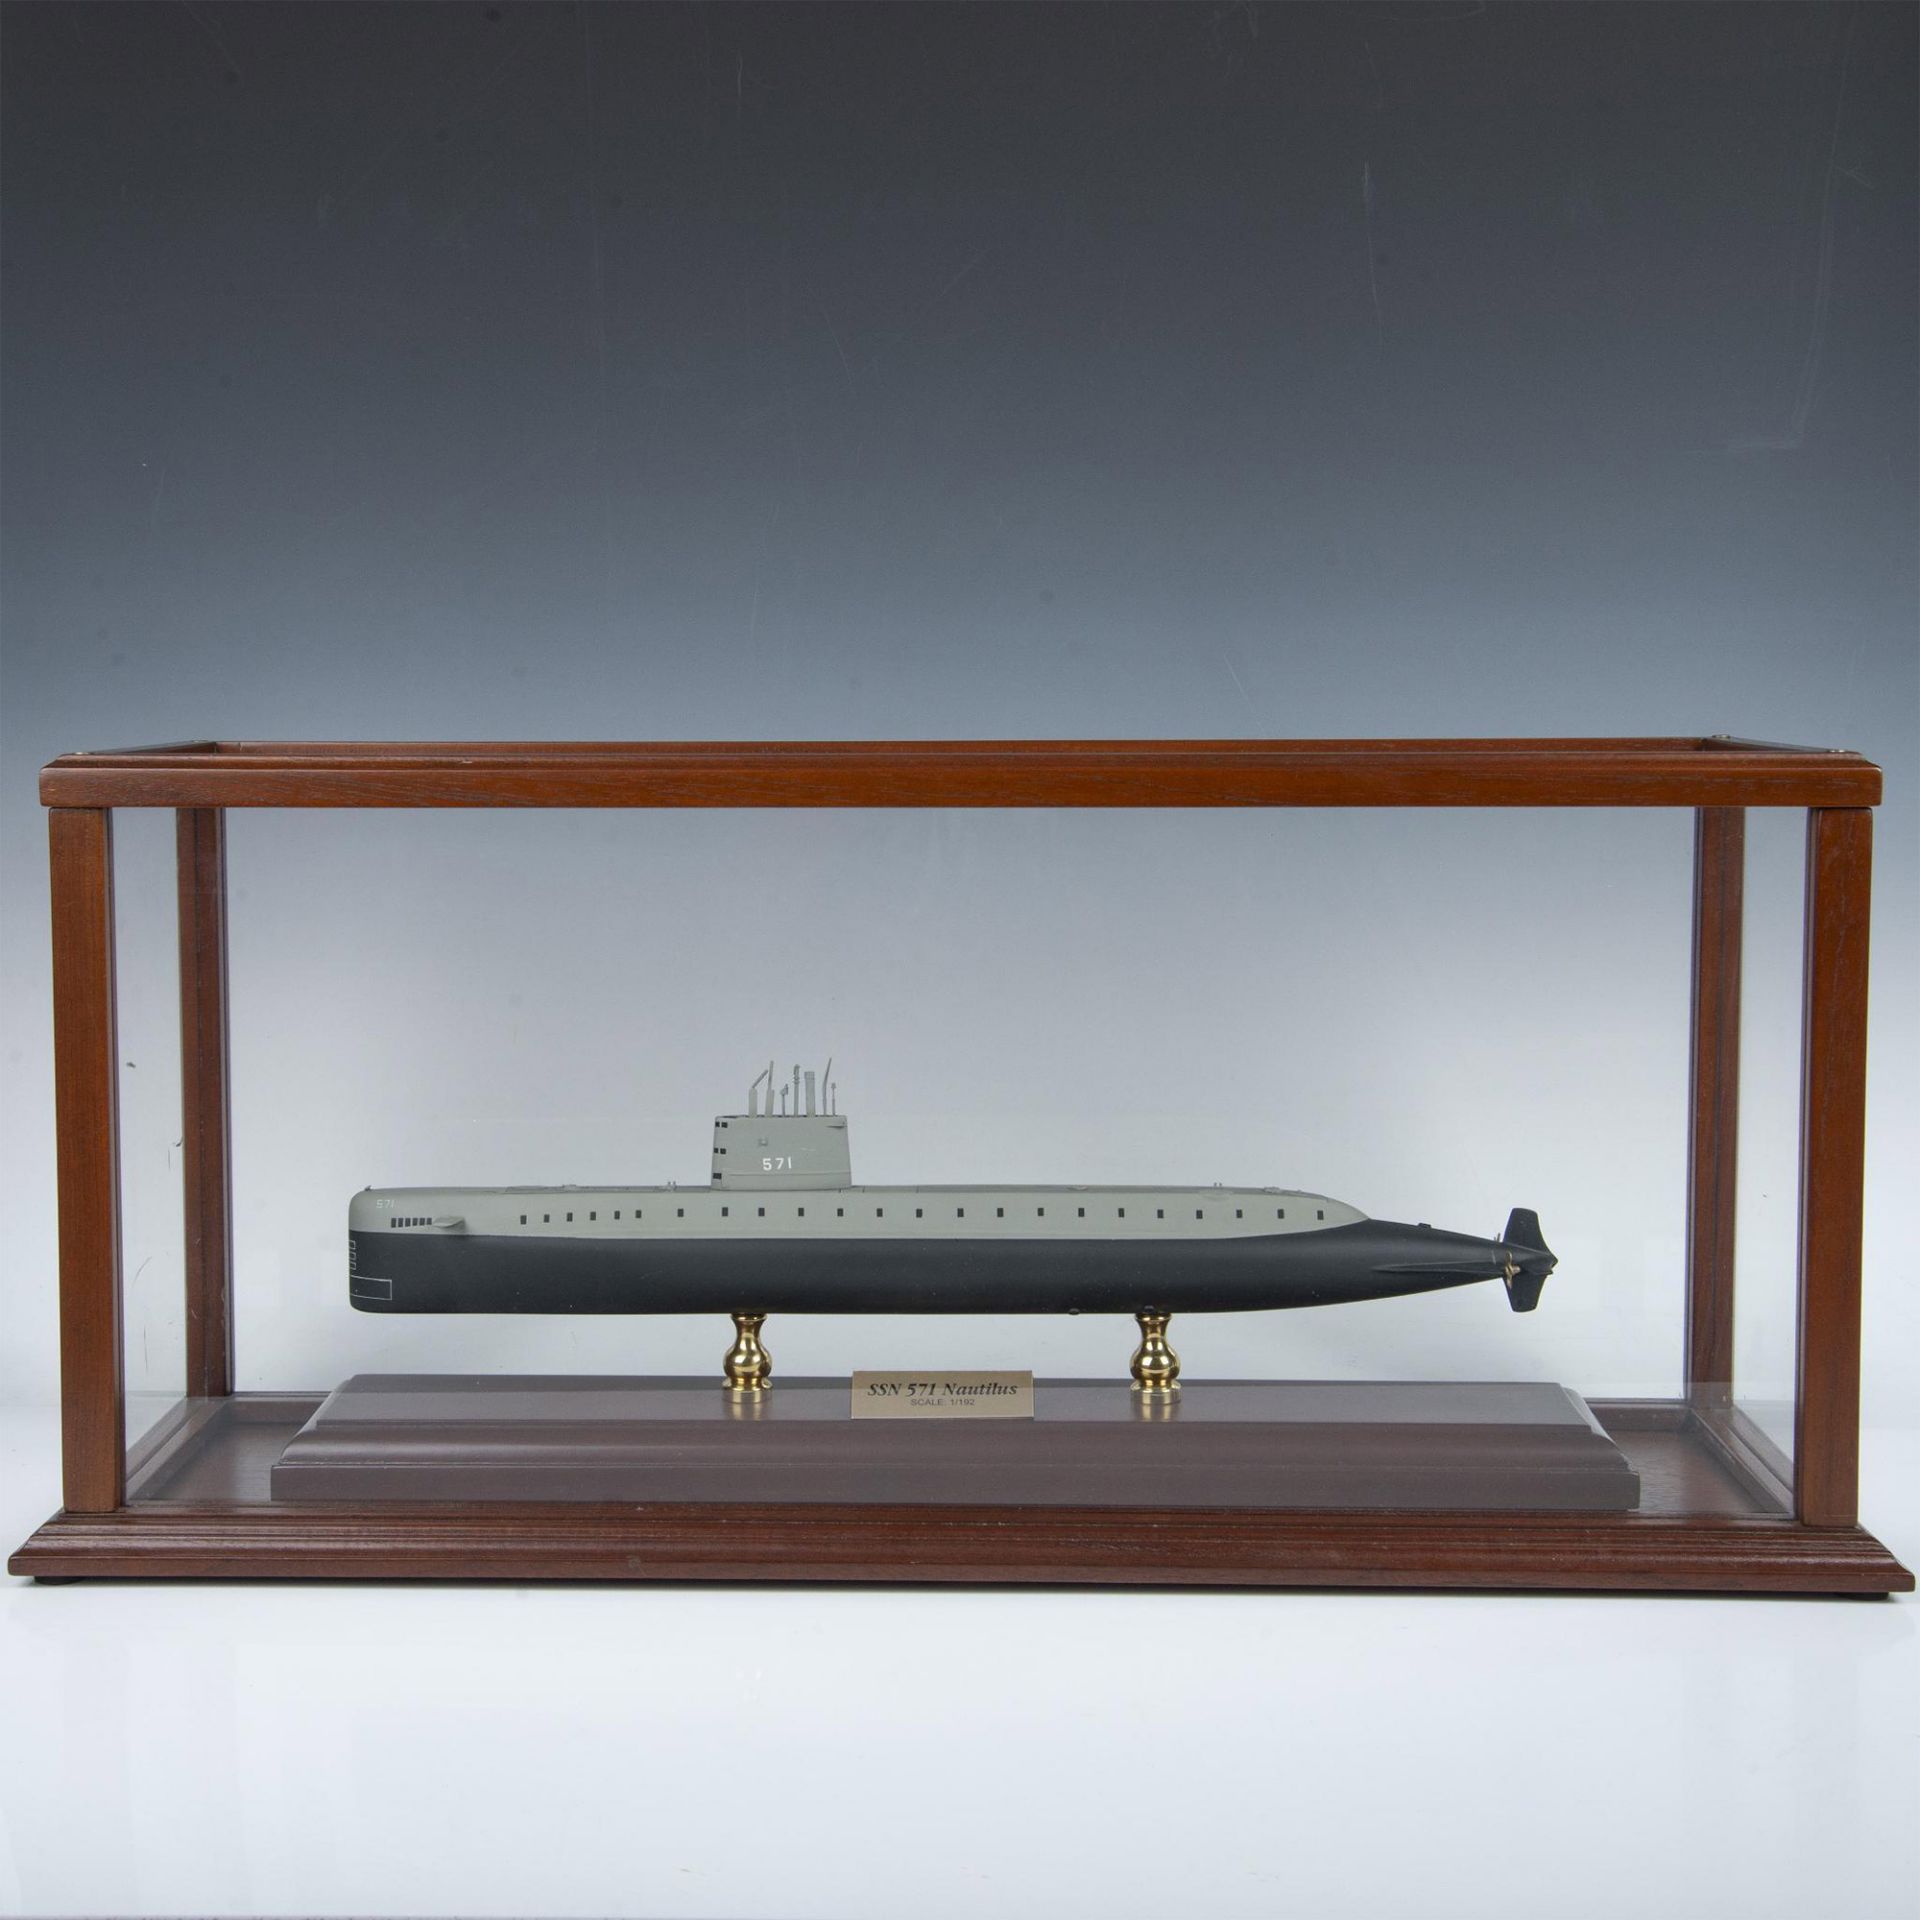 SSN 571 Nautilus Submarine 1/192 Scale Model - Image 2 of 12